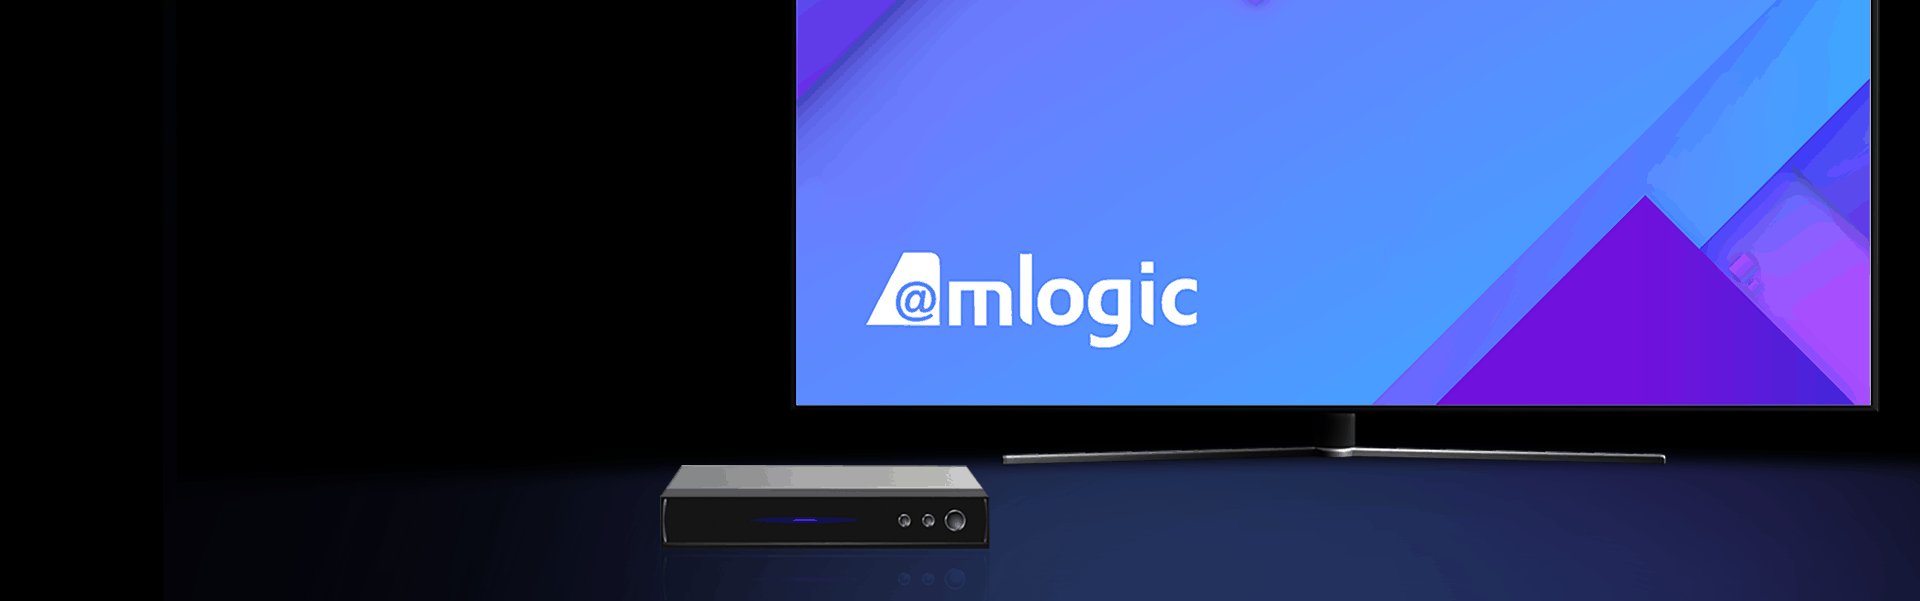 Amlogic-based Designs